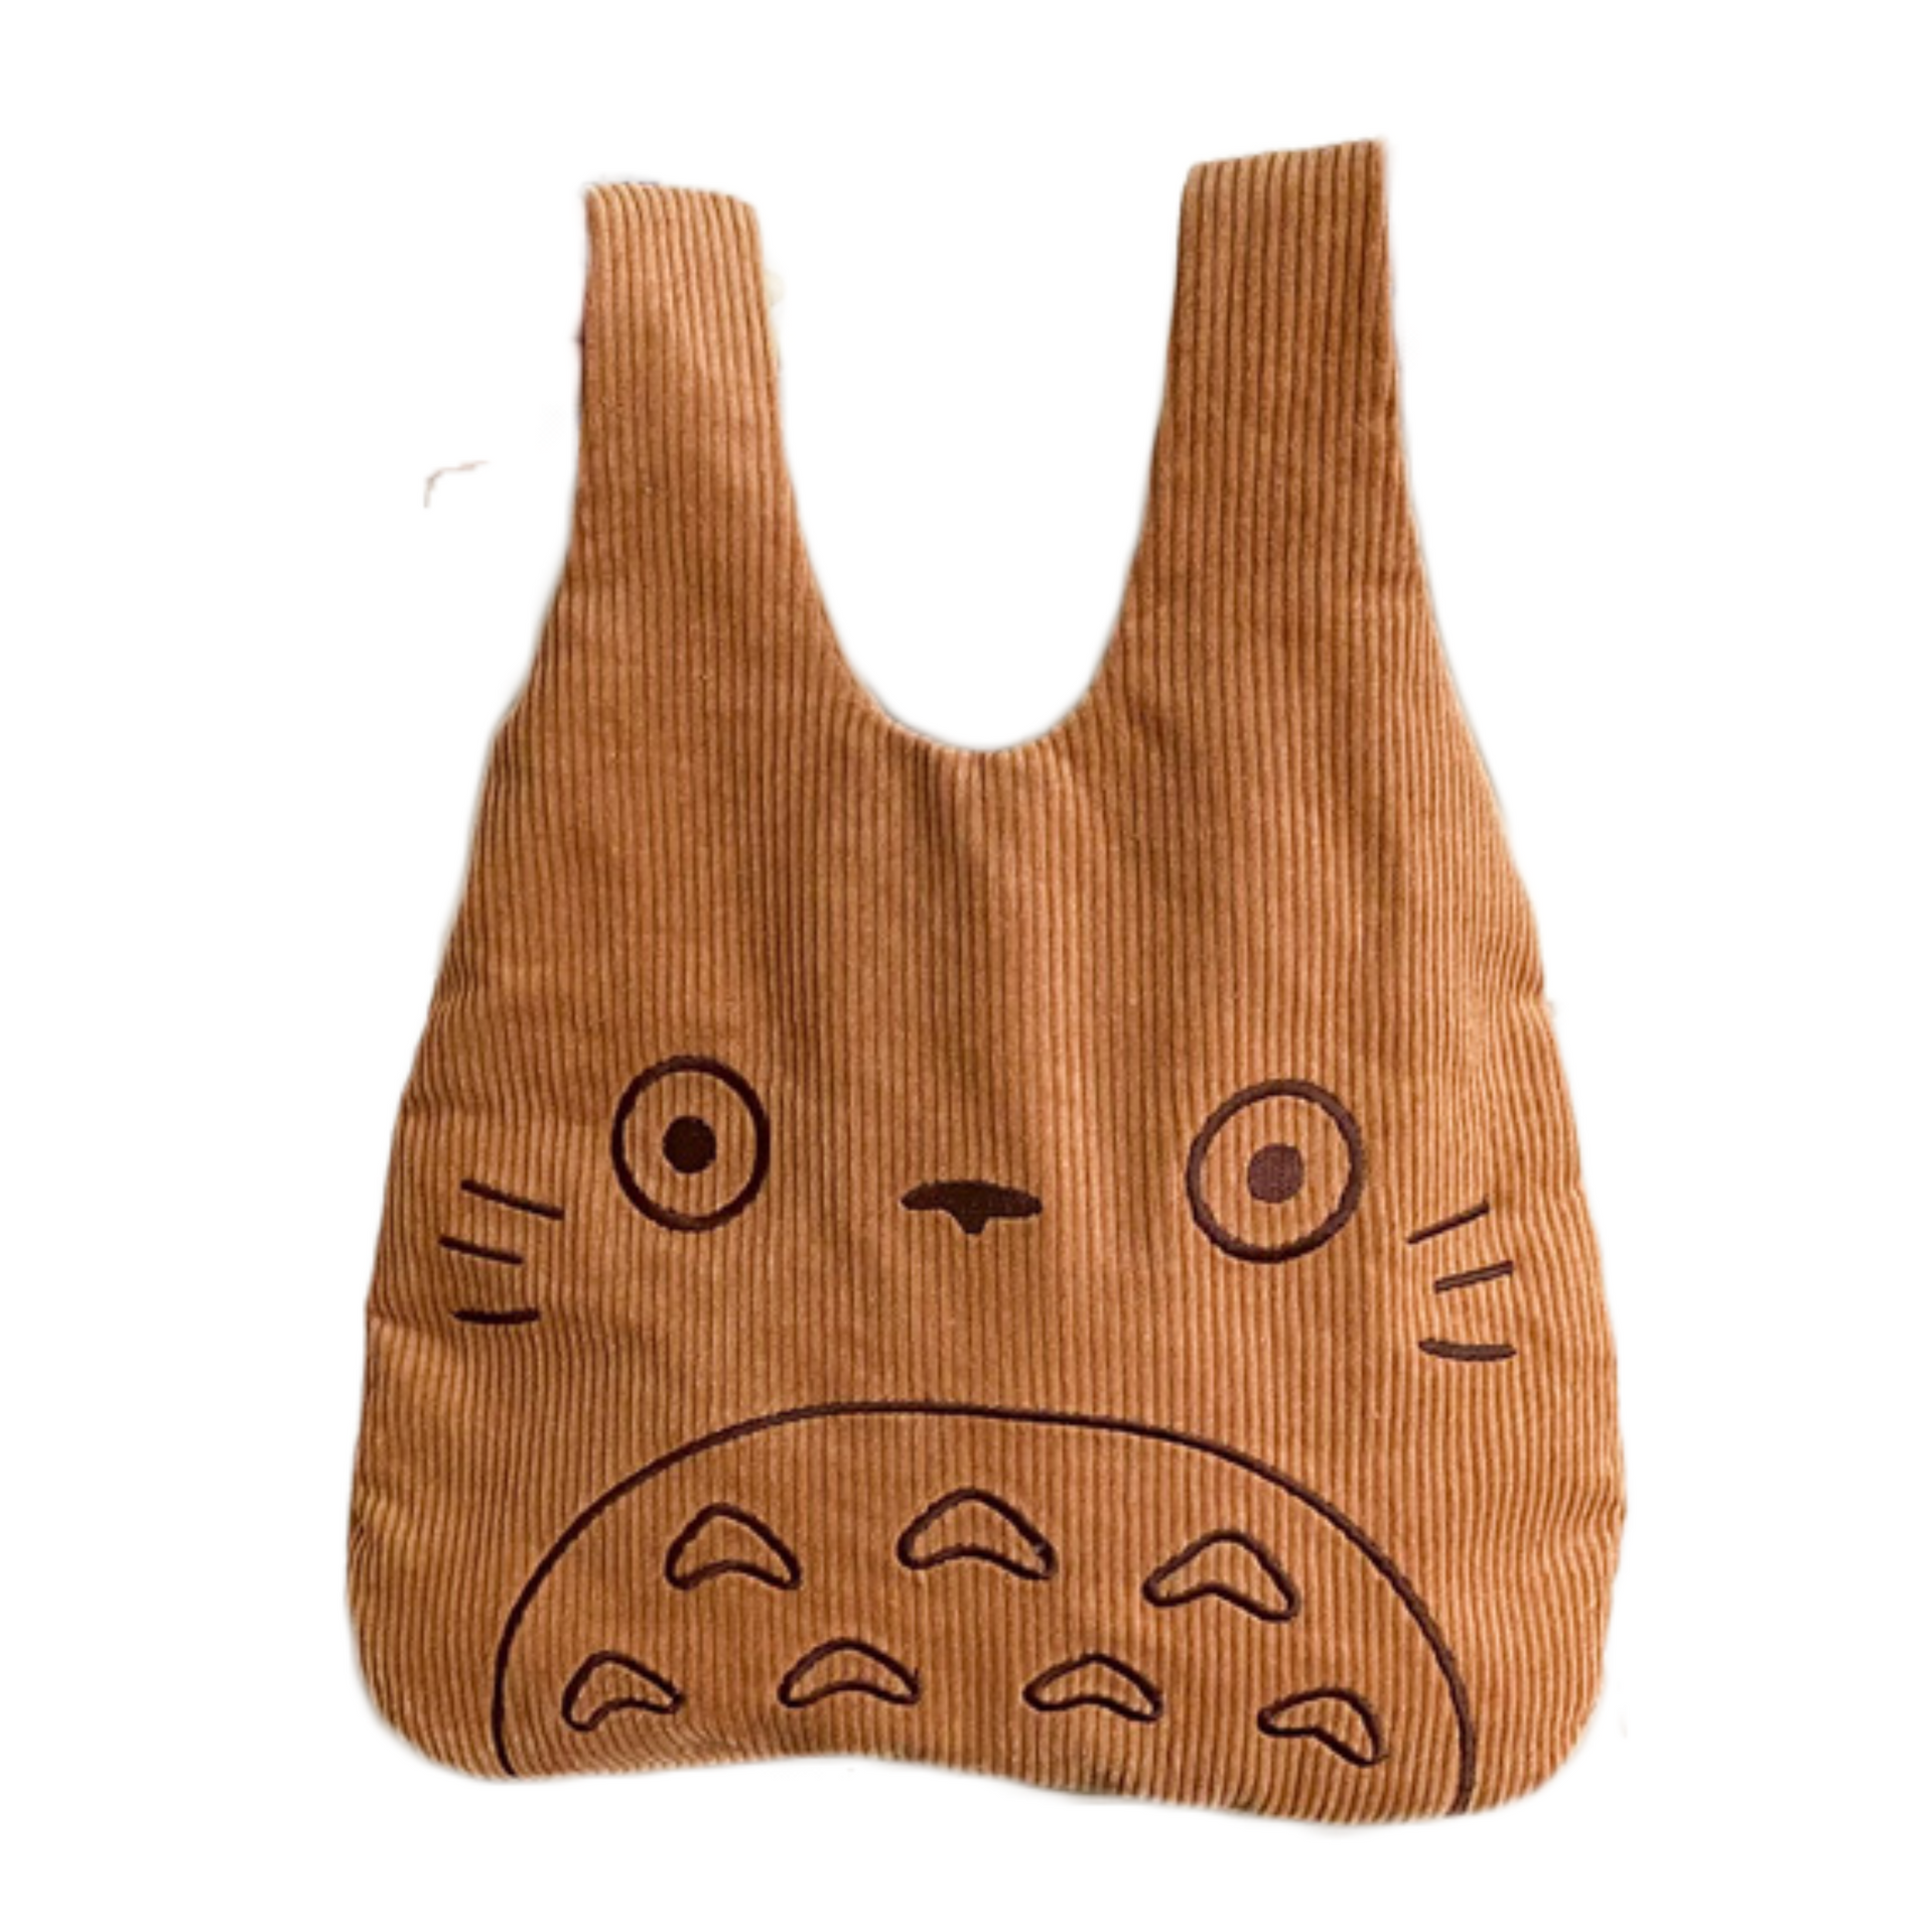 Totoro Bag - Brown - Switcheries